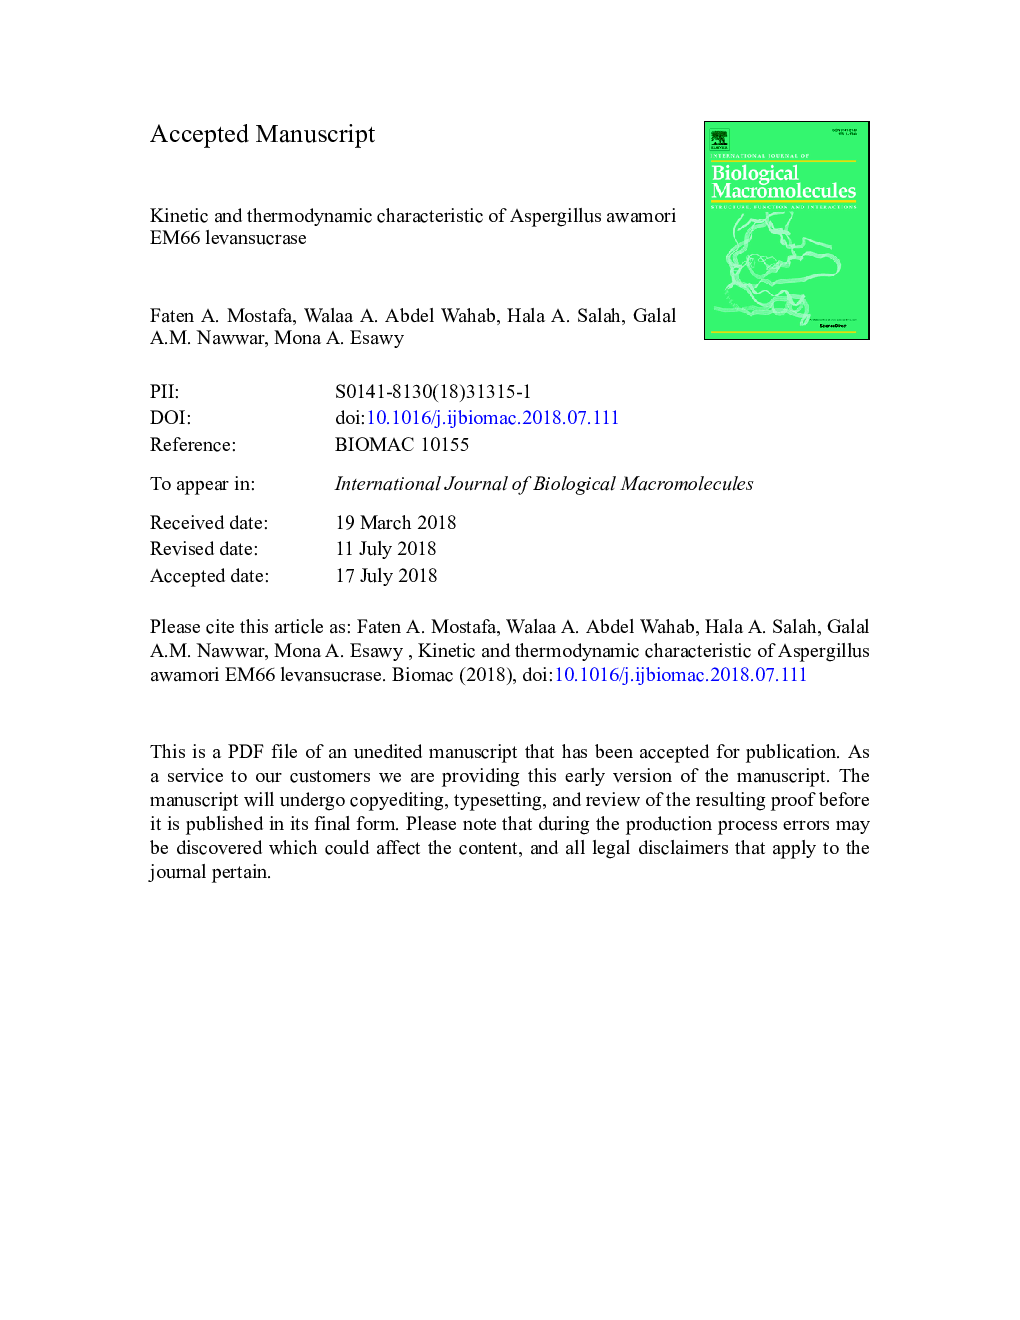 Kinetic and thermodynamic characteristic of Aspergillus awamori EM66 levansucrase